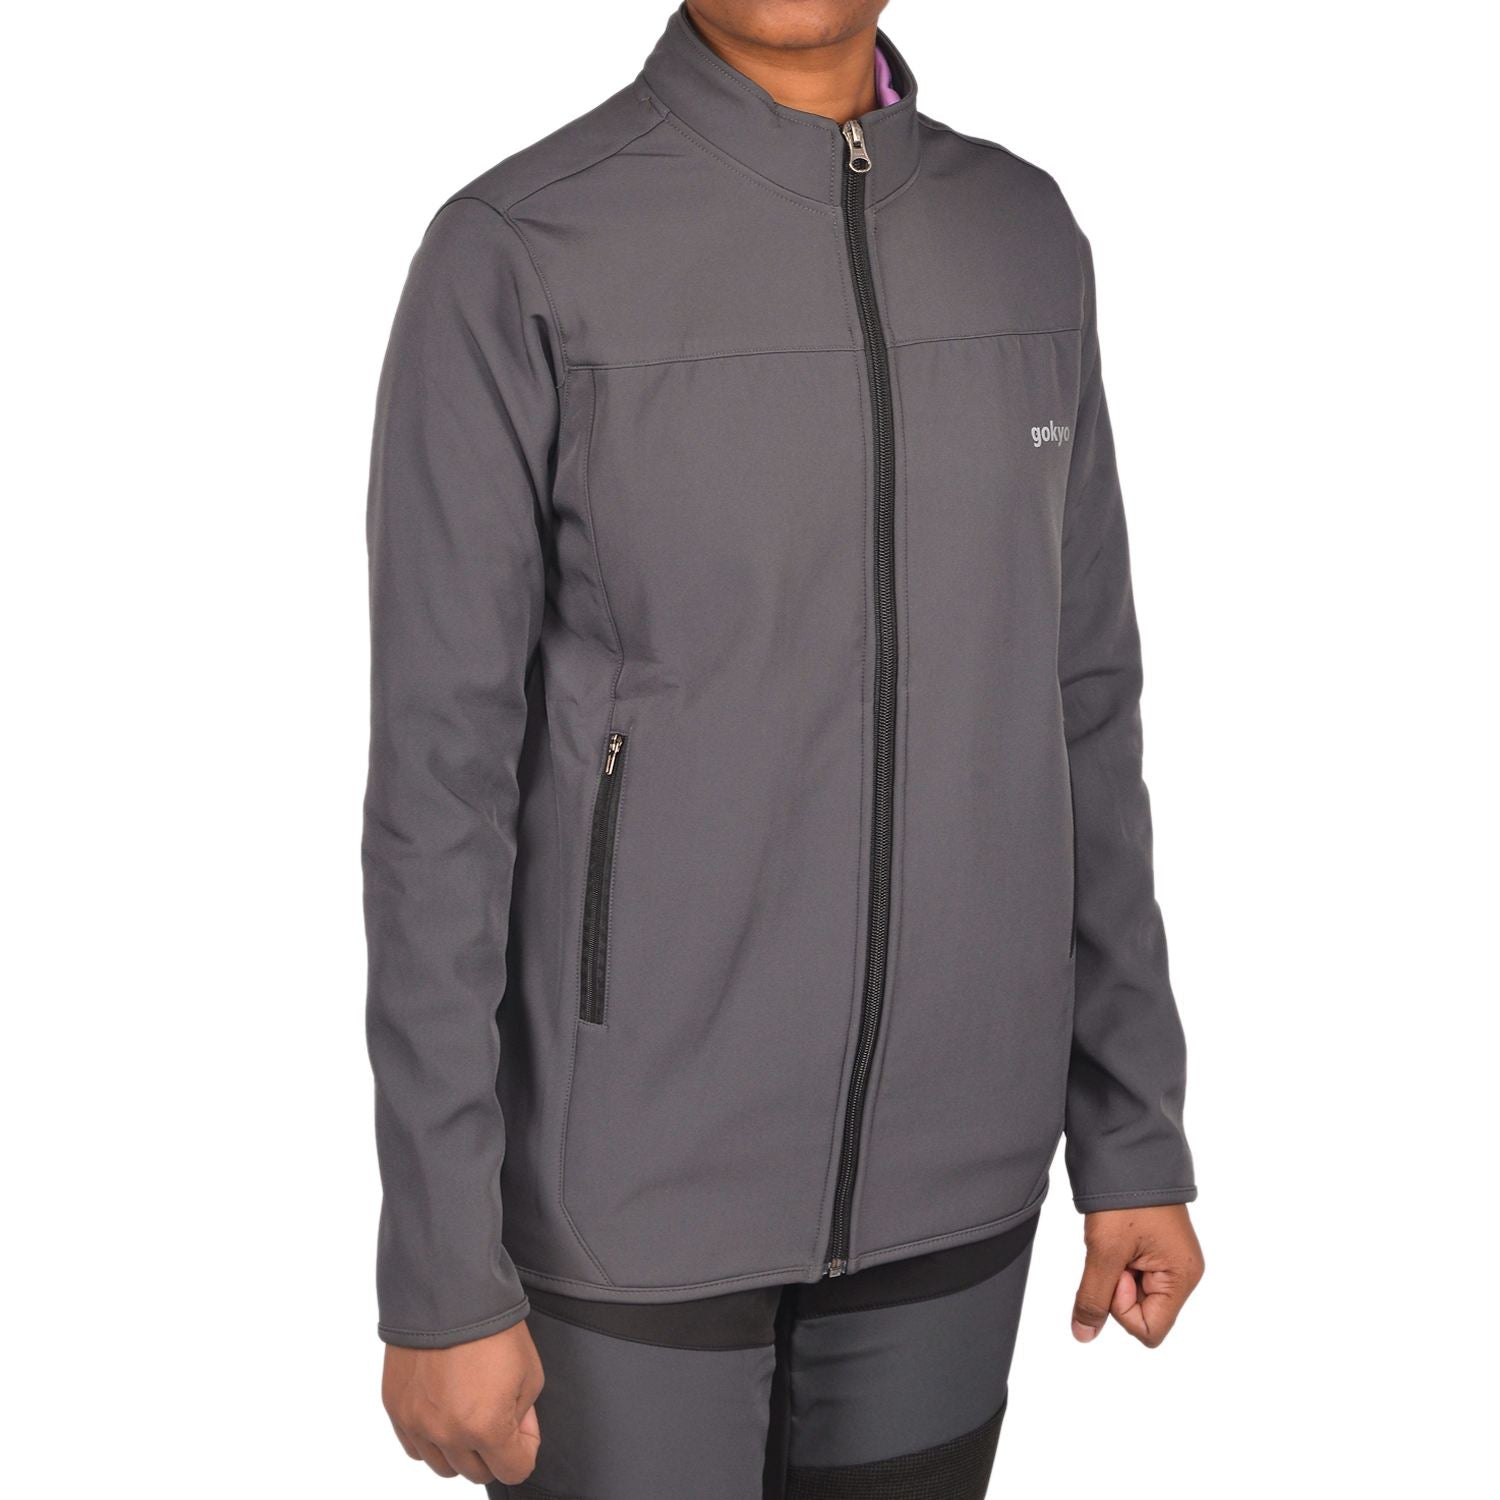 Buy Gokyo Kaza Soft Shell Insulated Fleece Jacket - Women | Jackets at Gokyo Outdoor Clothing & Gear